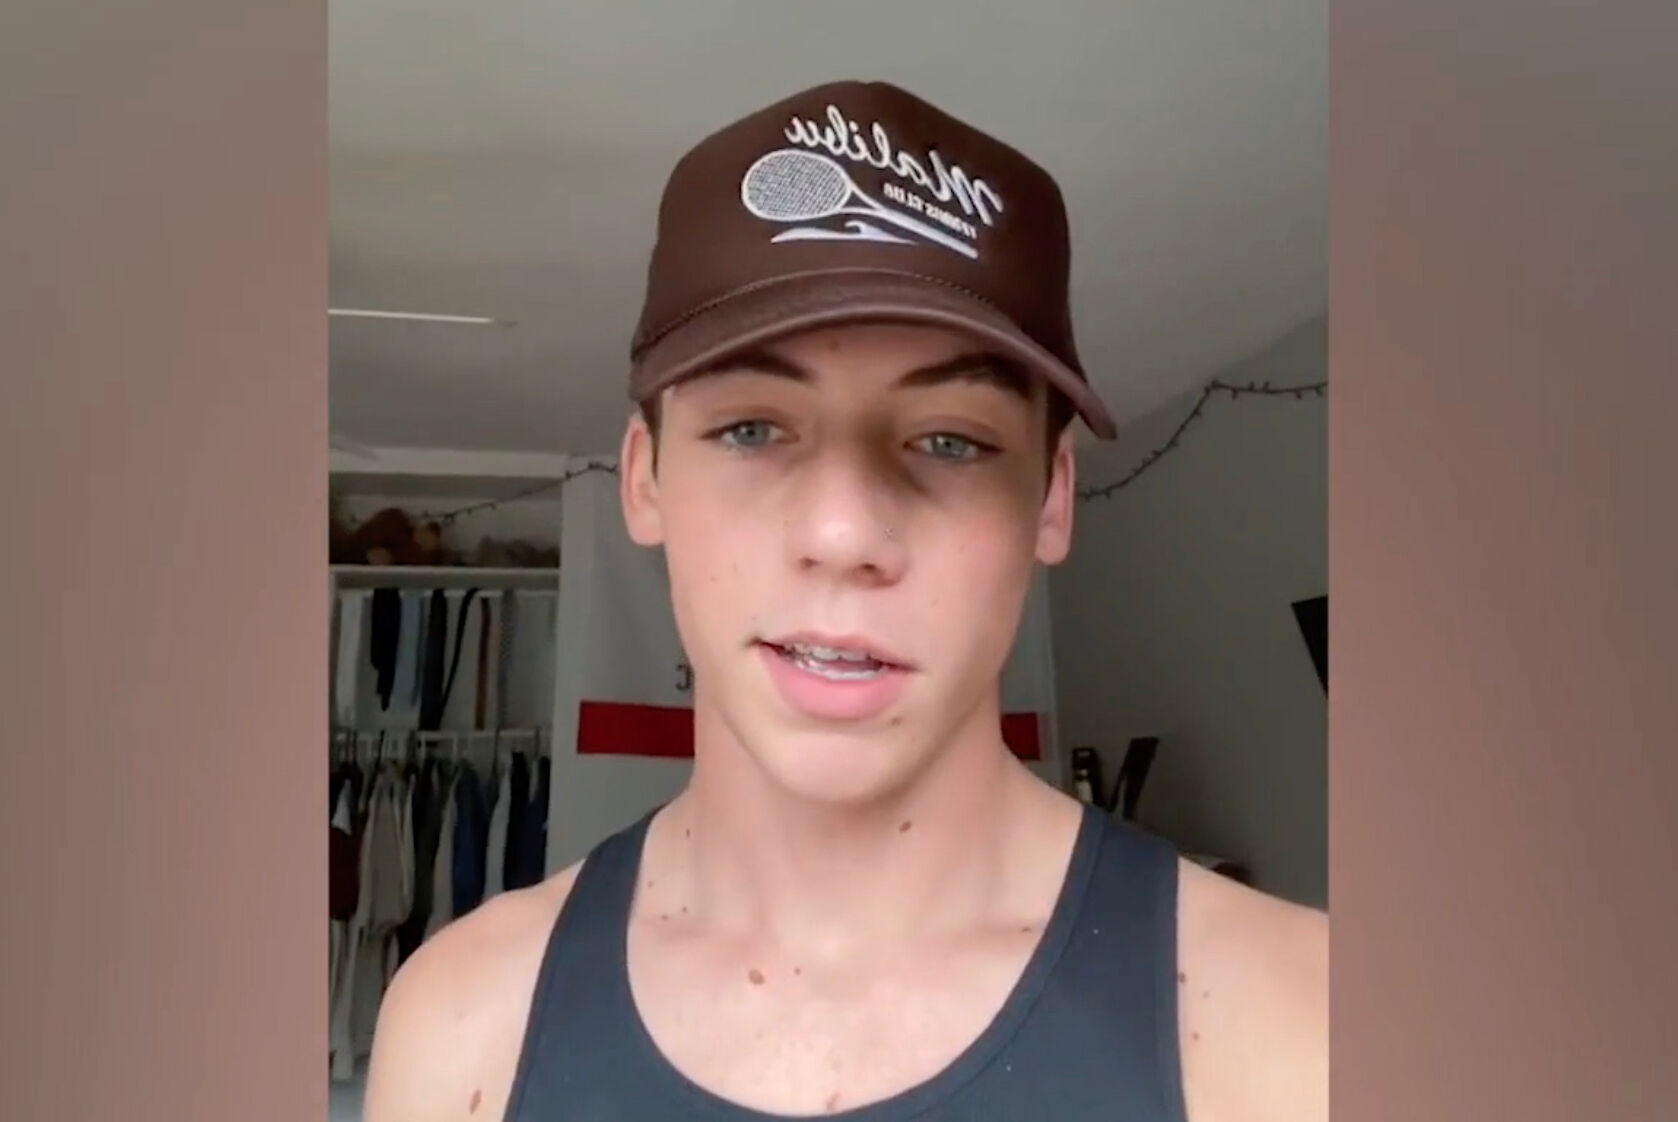 Gay teen exposes horrific bullying in viral TikTok video